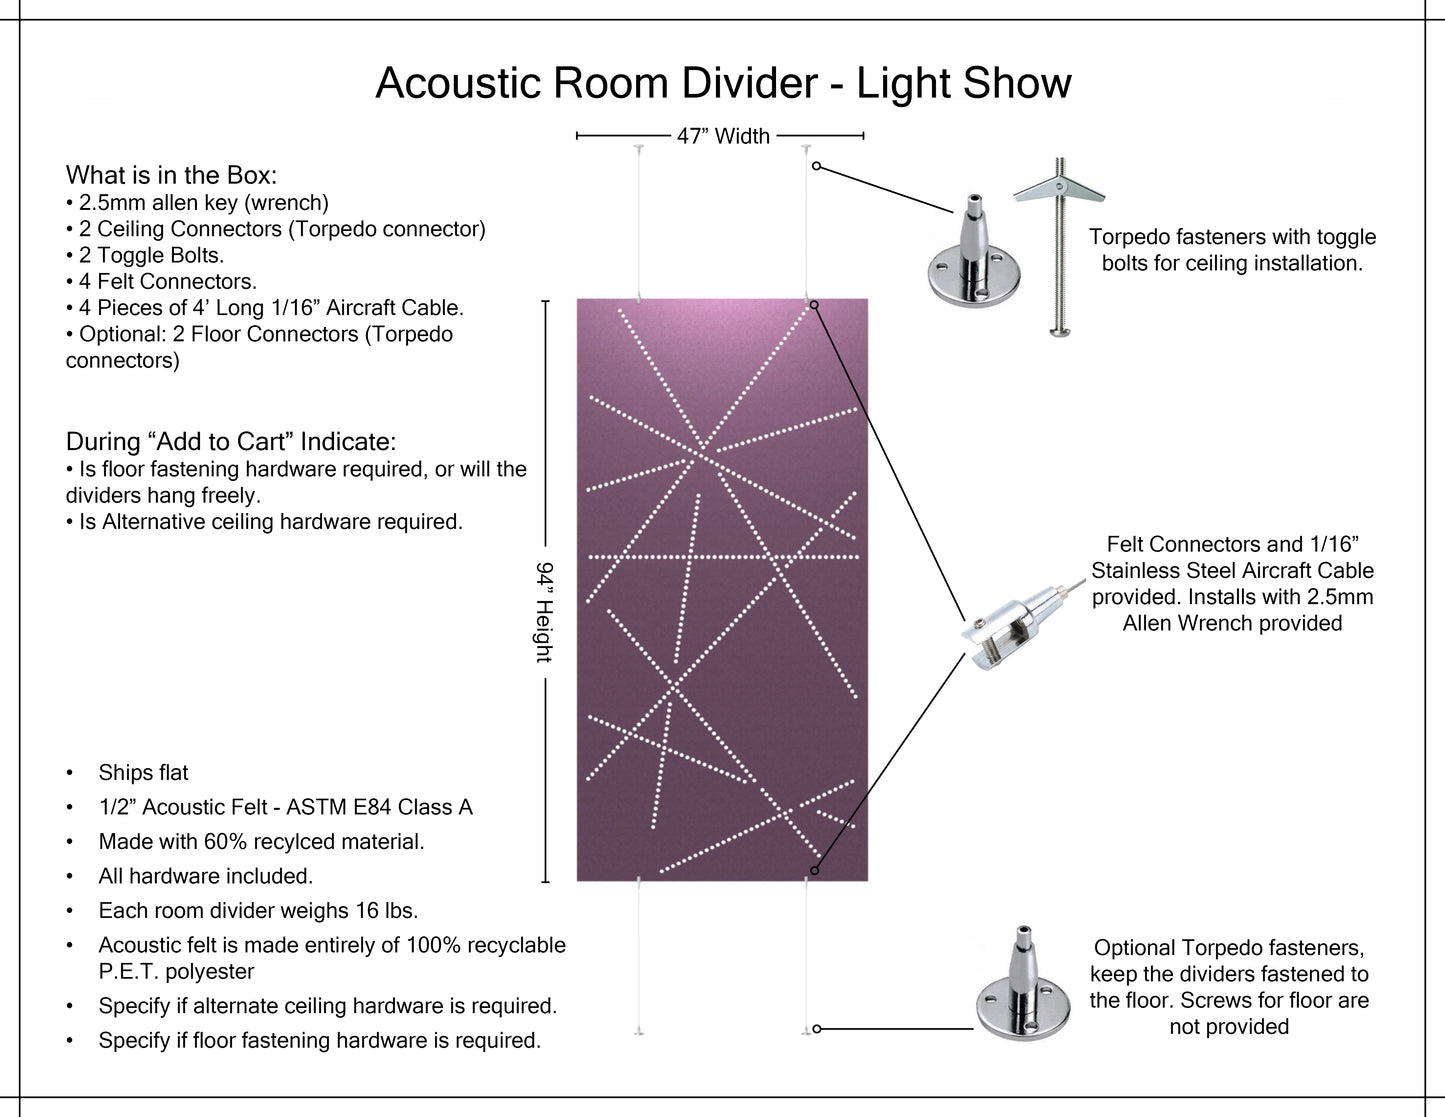 4x8 Acoustic Room Divider - Light Show